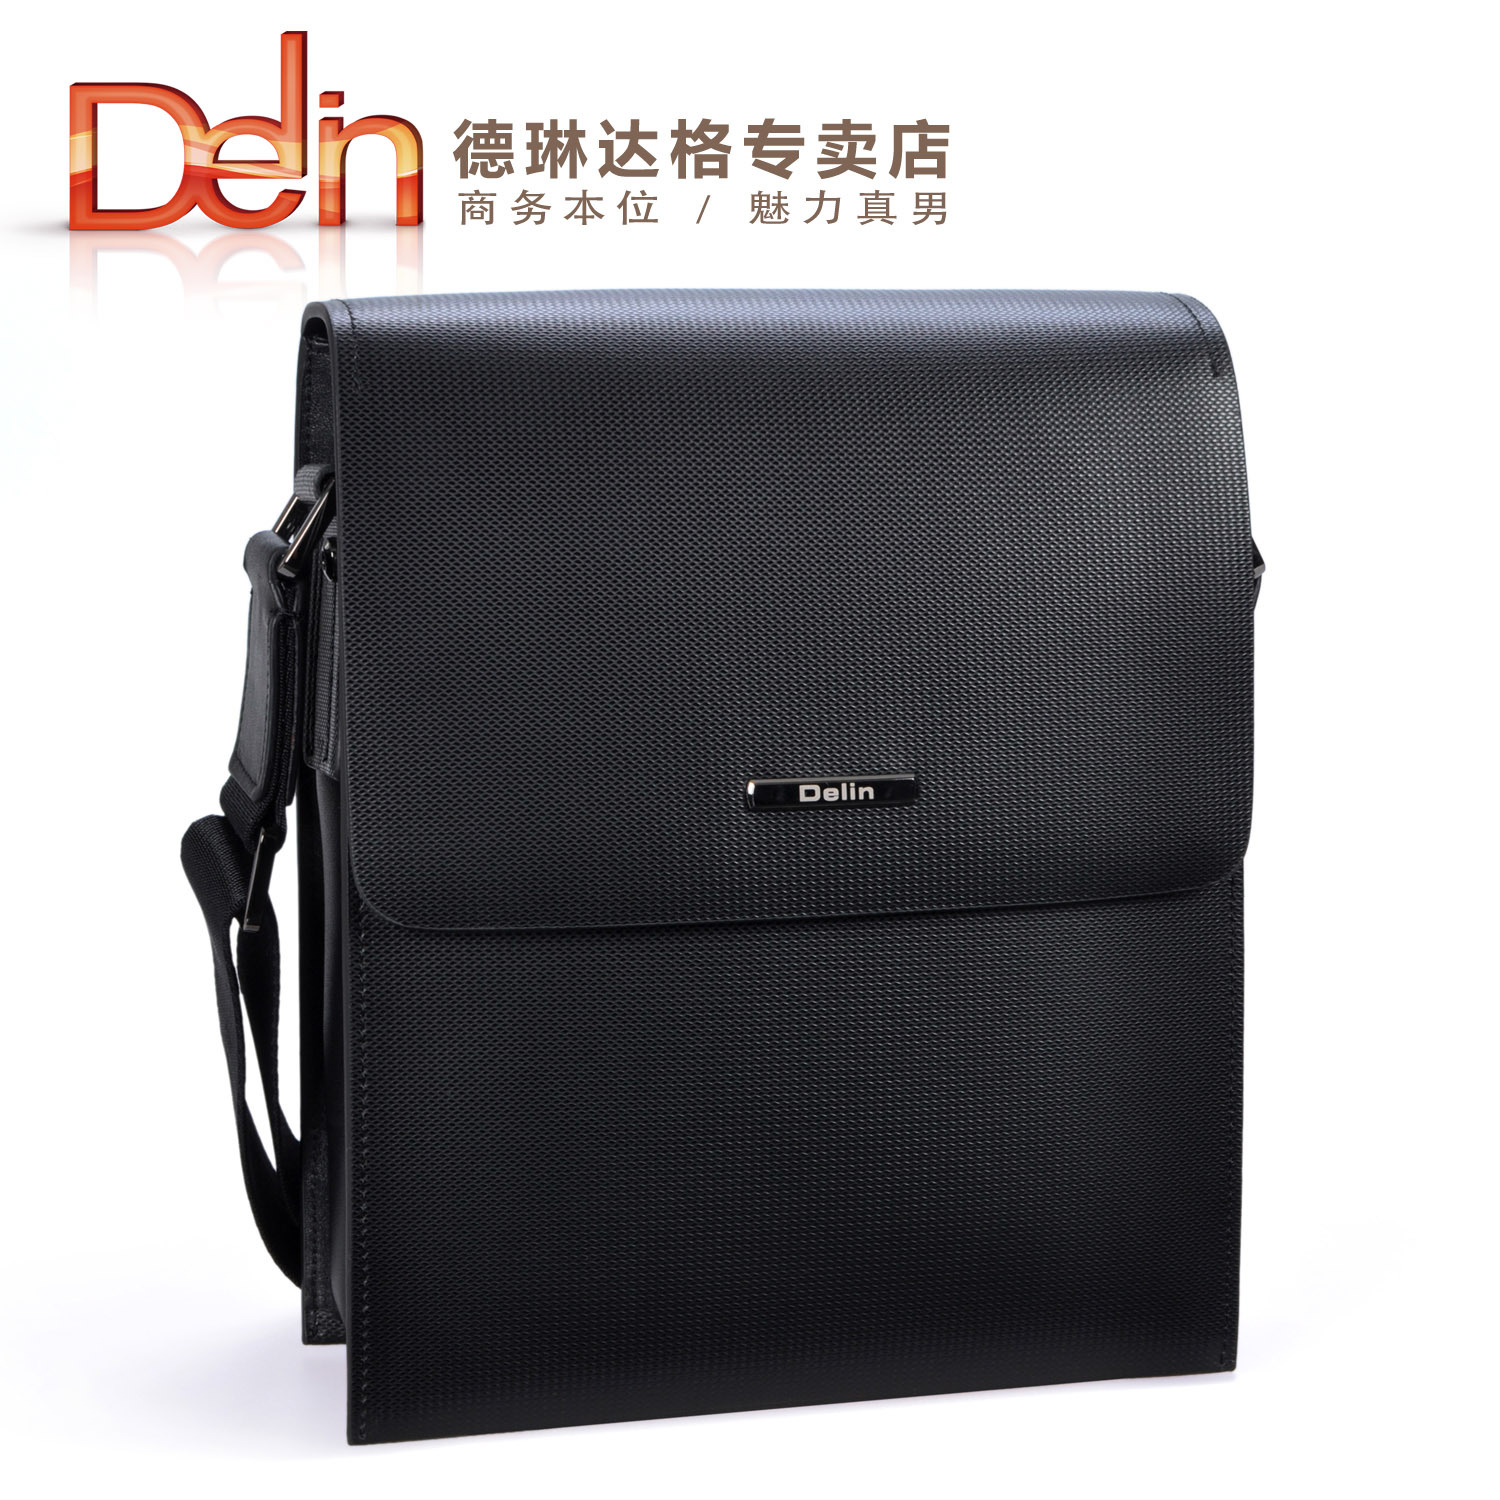 ... business-formal-messenger-bag-leather-bag-diamond-pattern-man-bag.jpg